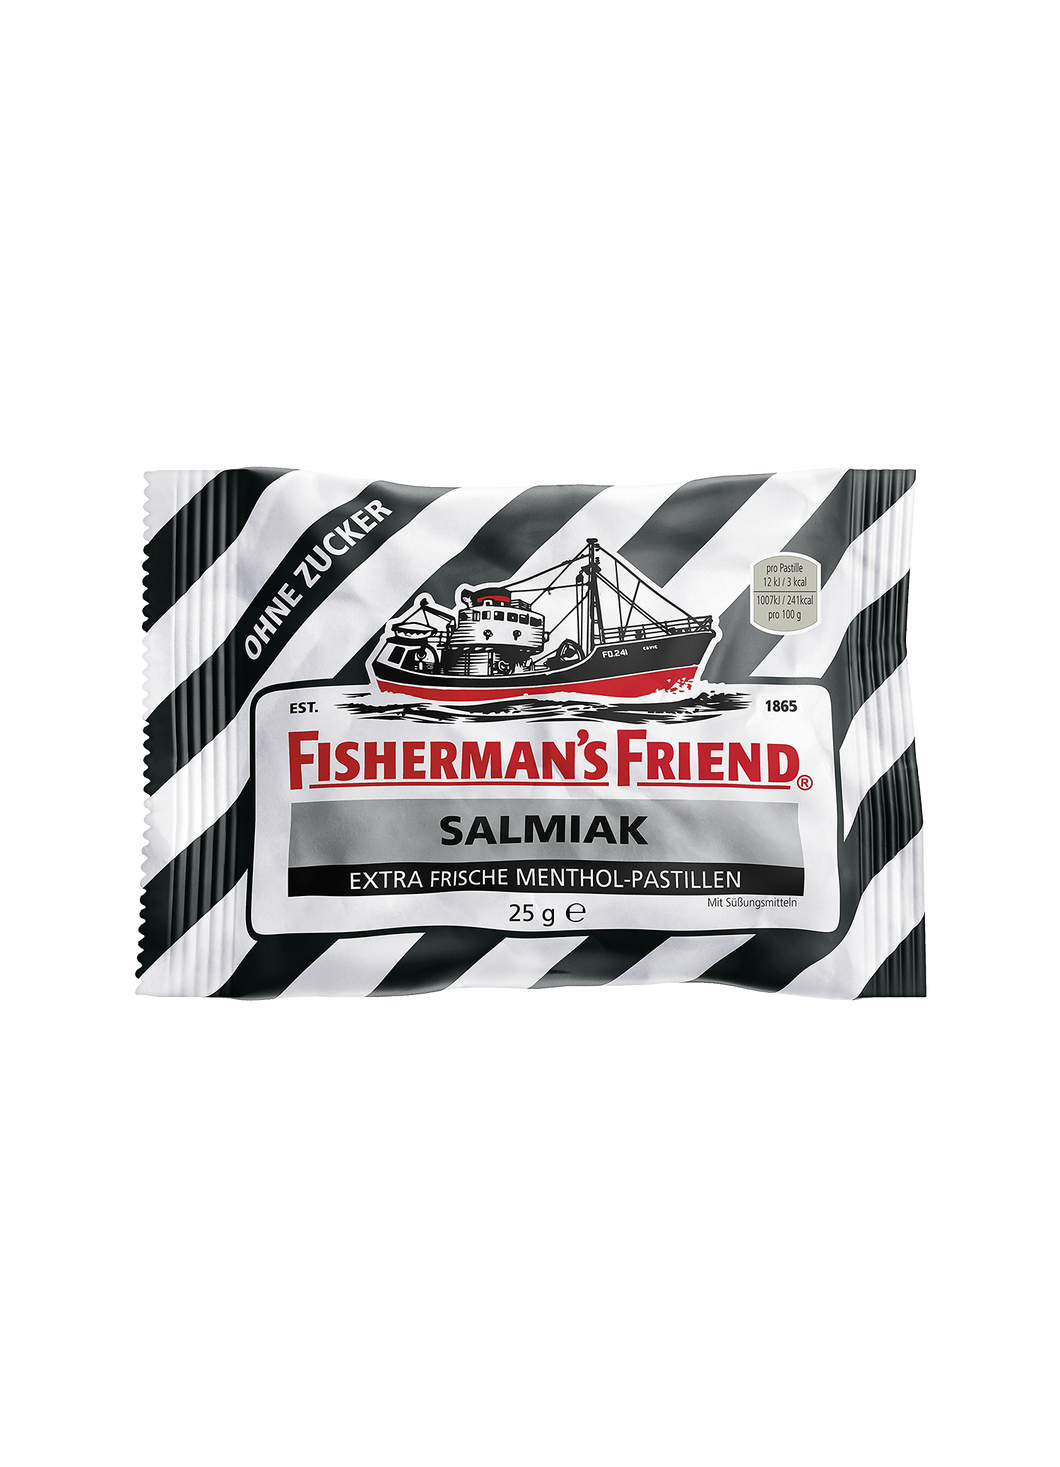 Fisherman's Friend Sugar Free Extra Frische Menthol Pastillen Lozenges Salmiak 25g